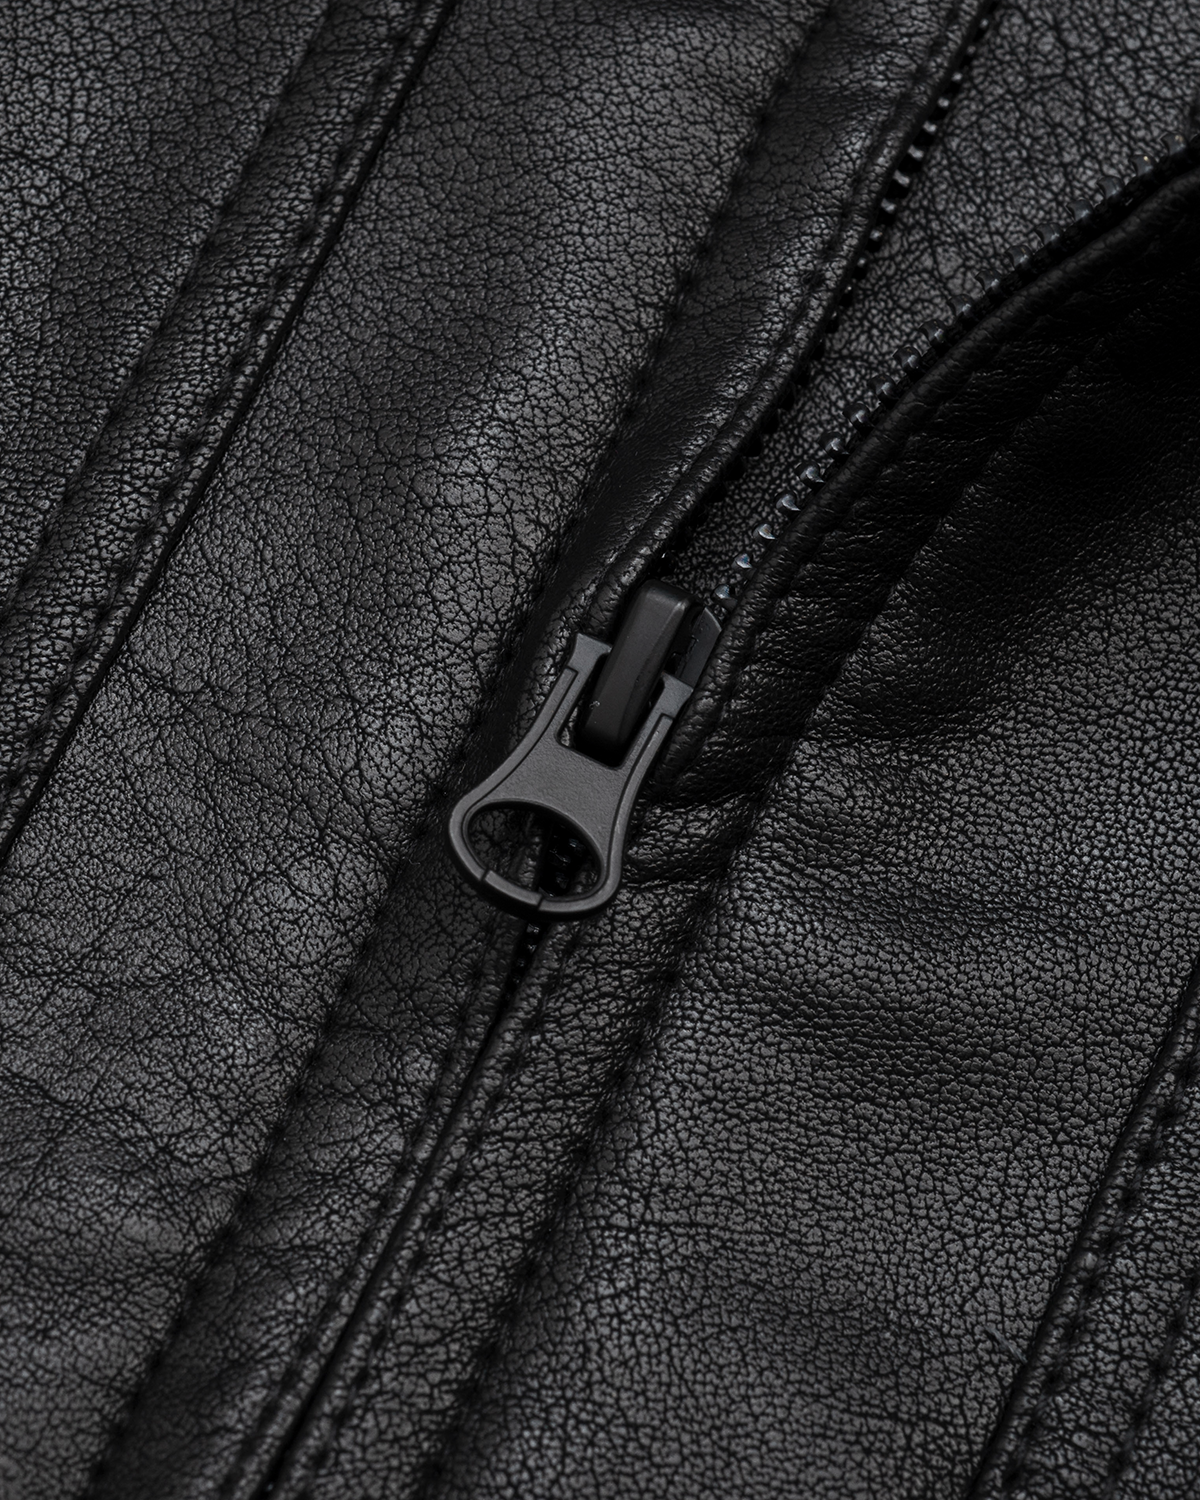 Off The Label cargo-pockets leather bomber jacket black